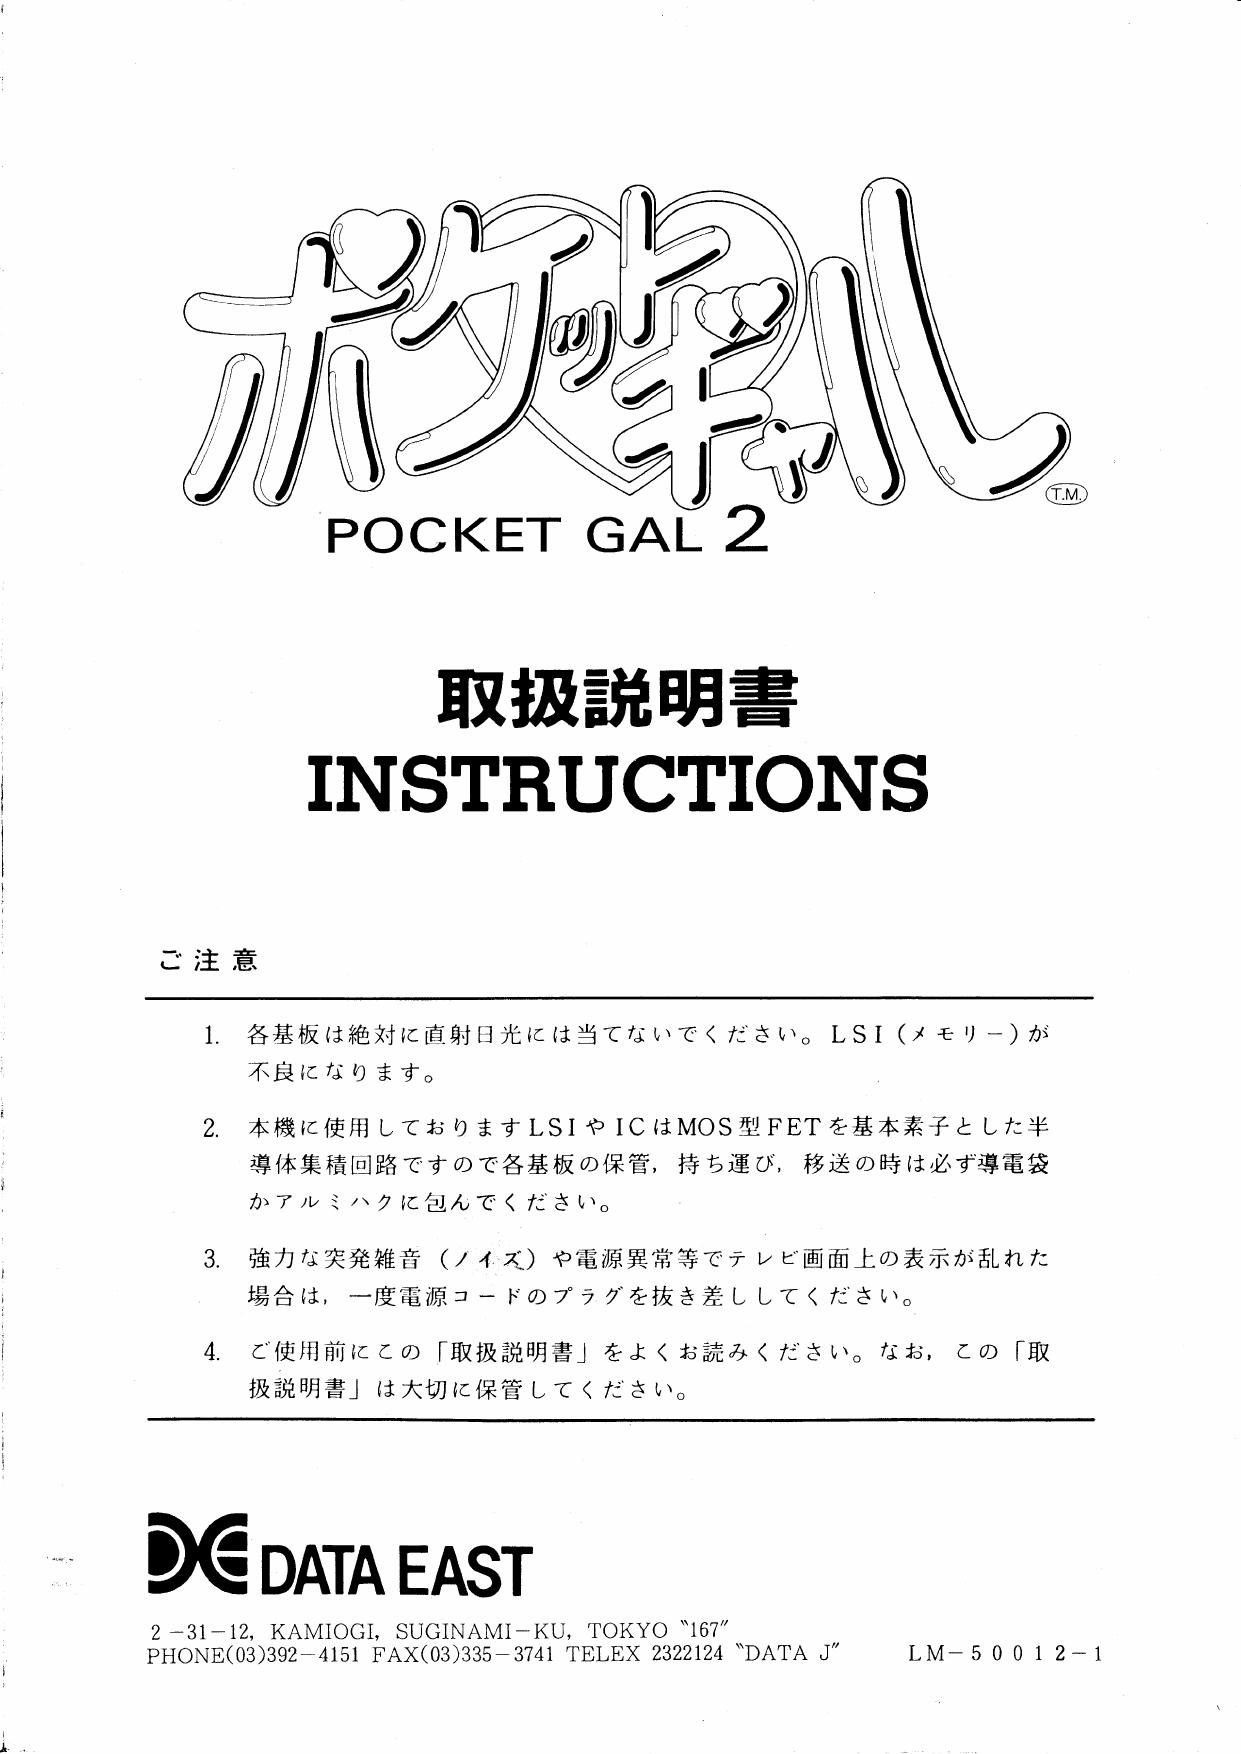 Pocket Gal 2